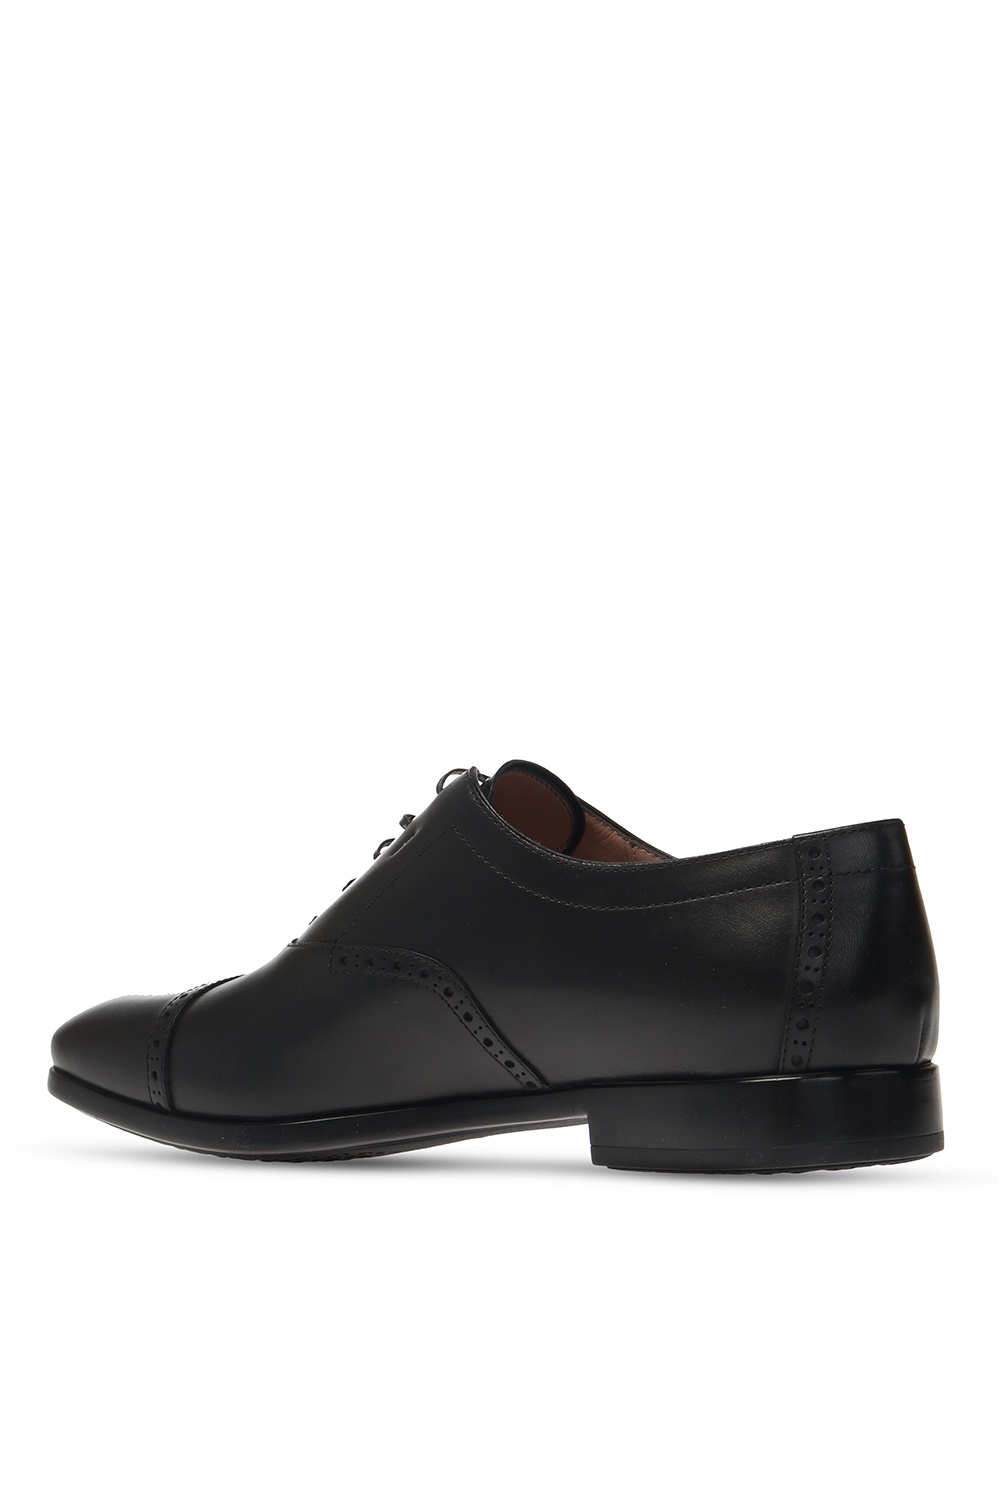 FERRAGAMO ‘Riley’ leather boot shoes